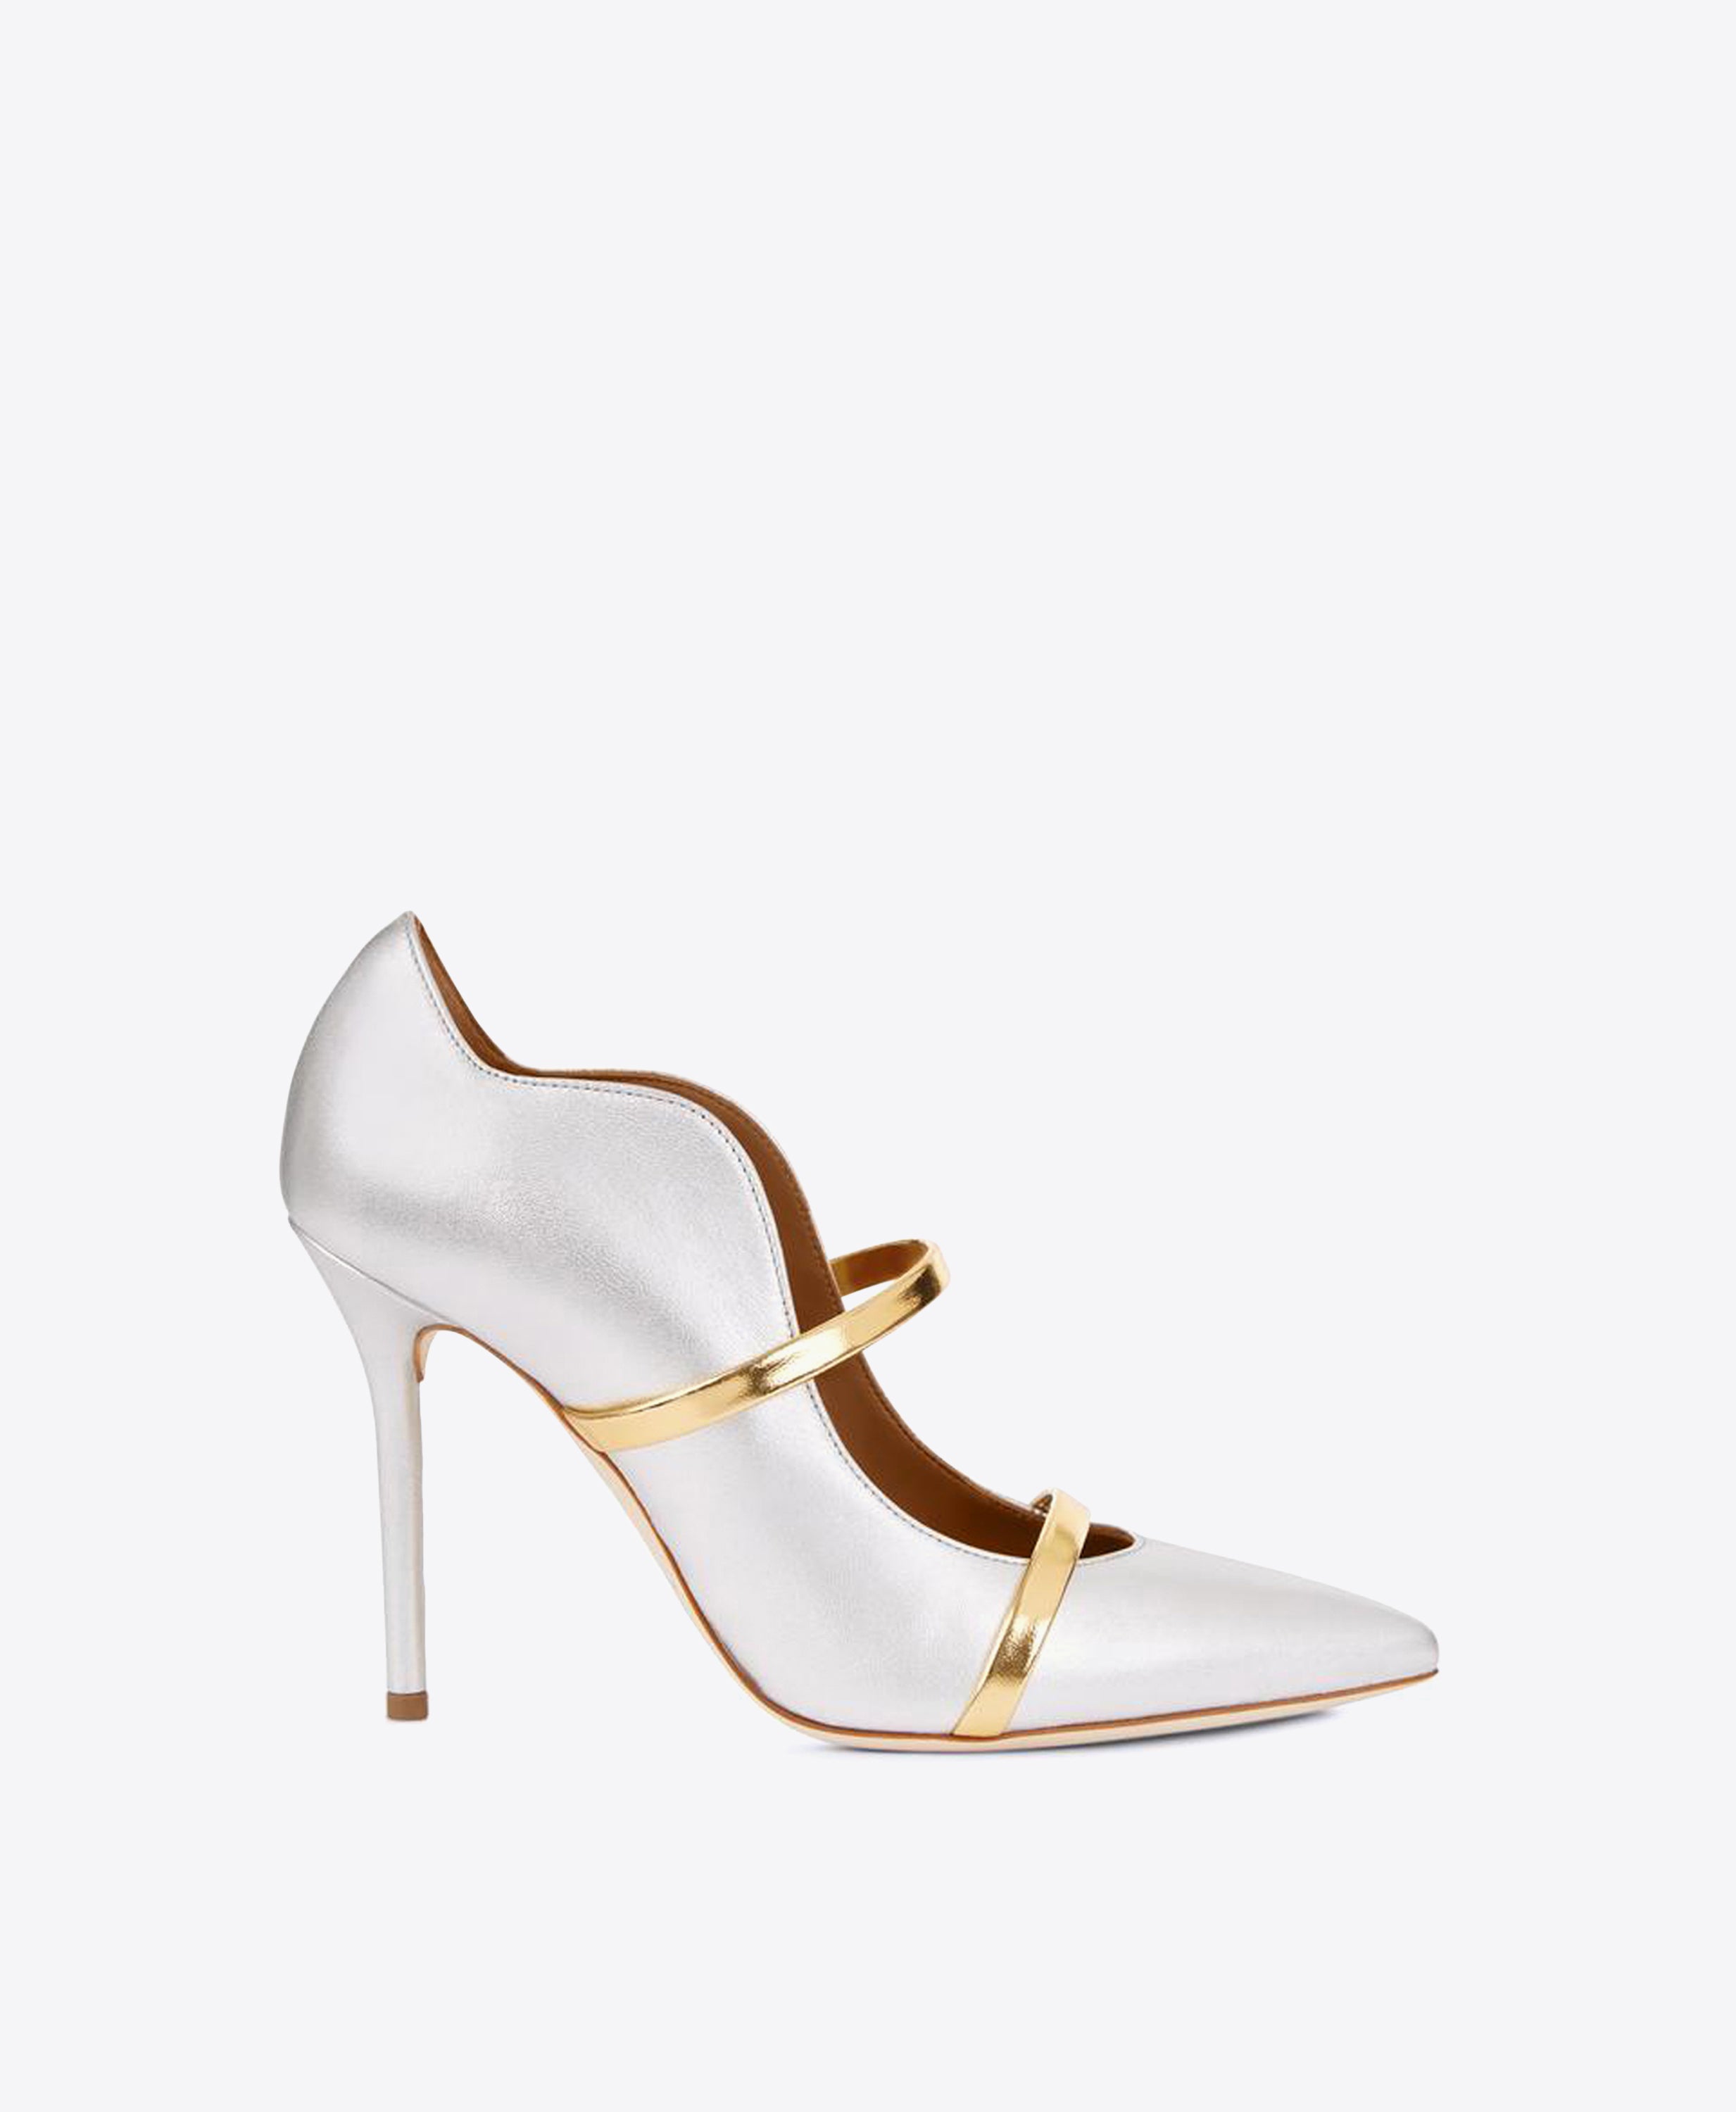 Risque Gold PU Strappy Pointed Toe Gold Stiletto Heels | Public Desire